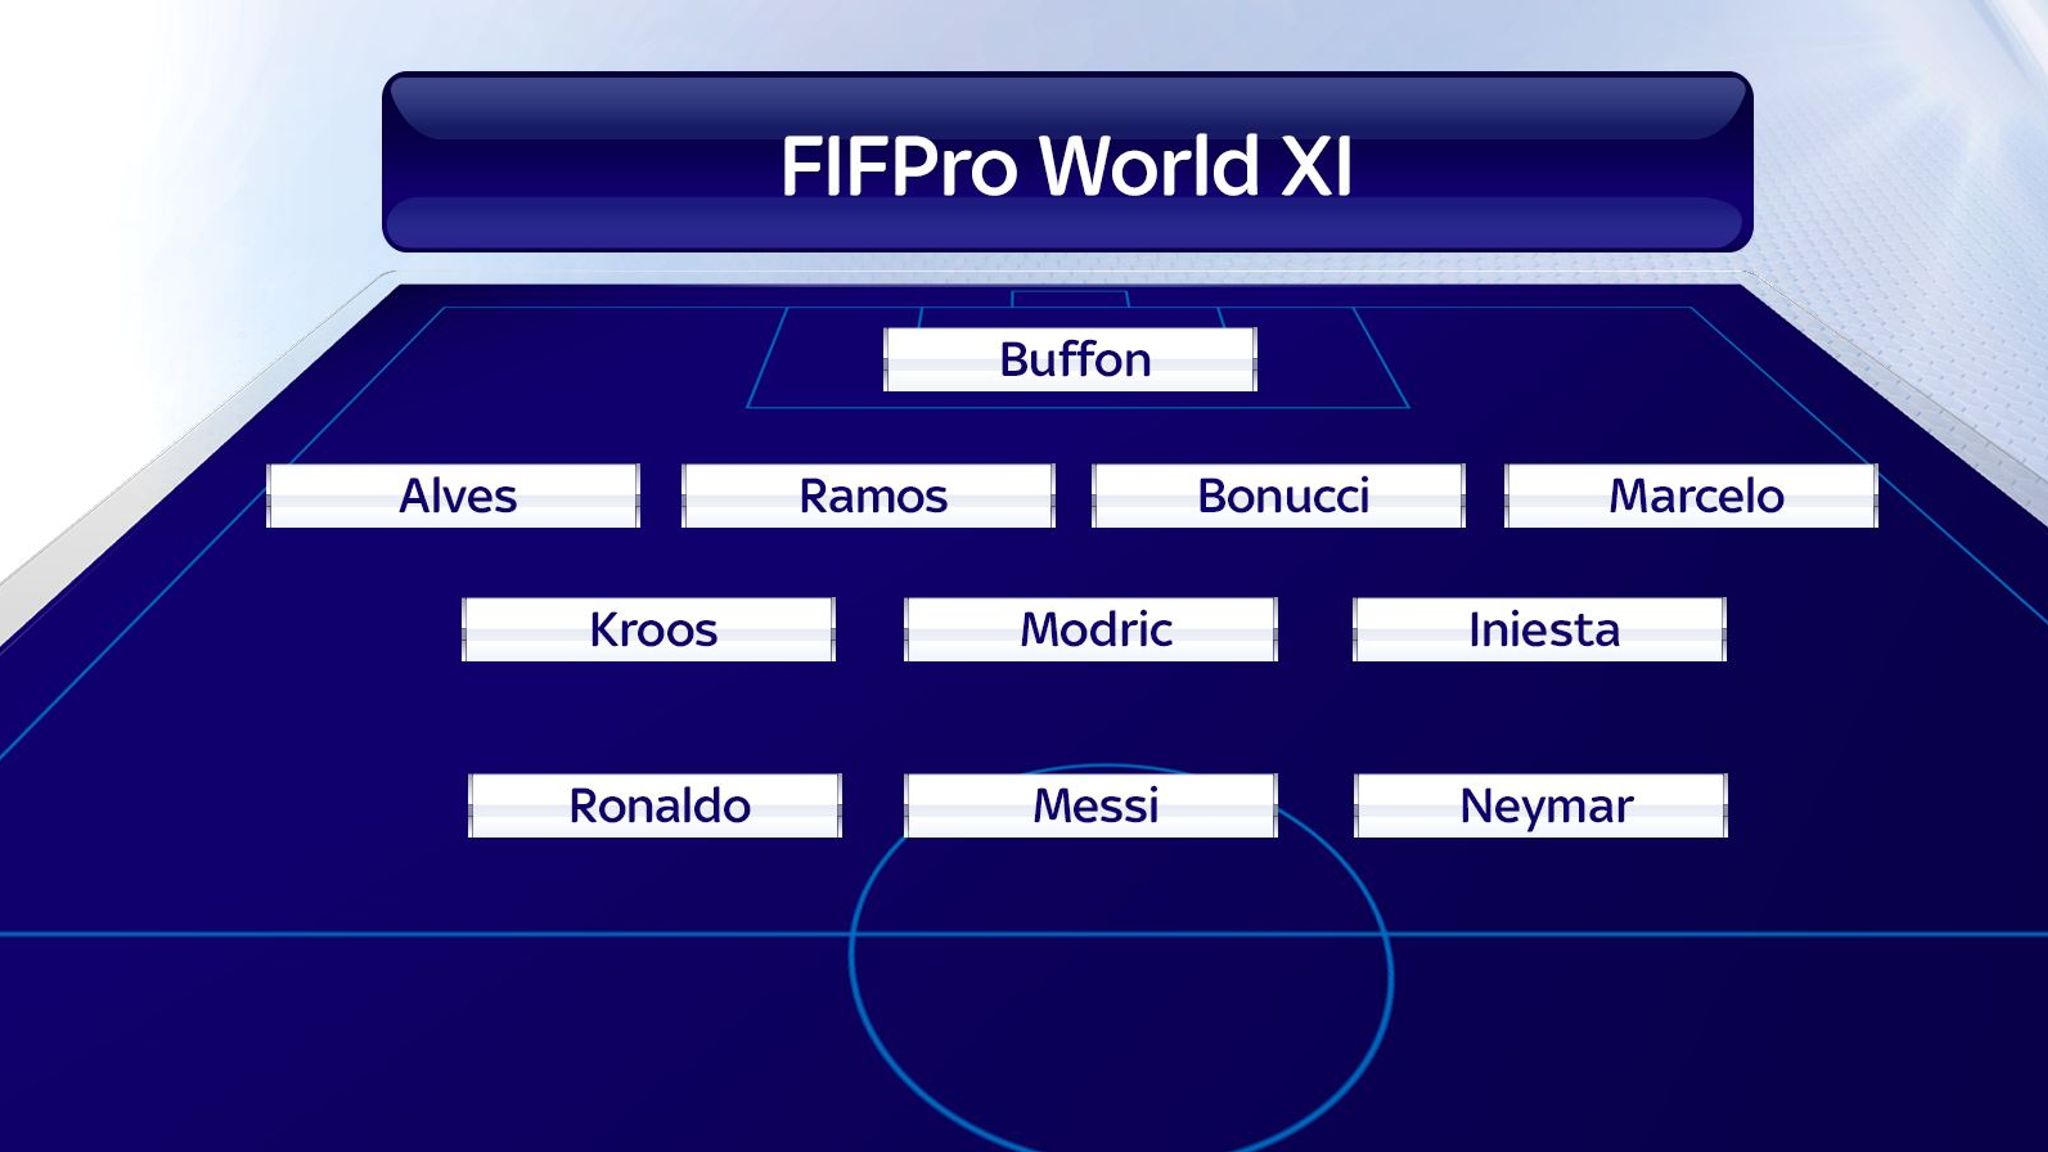 FIFPro World XI Cristiano Ronaldo, Lionel Messi and Neymar included